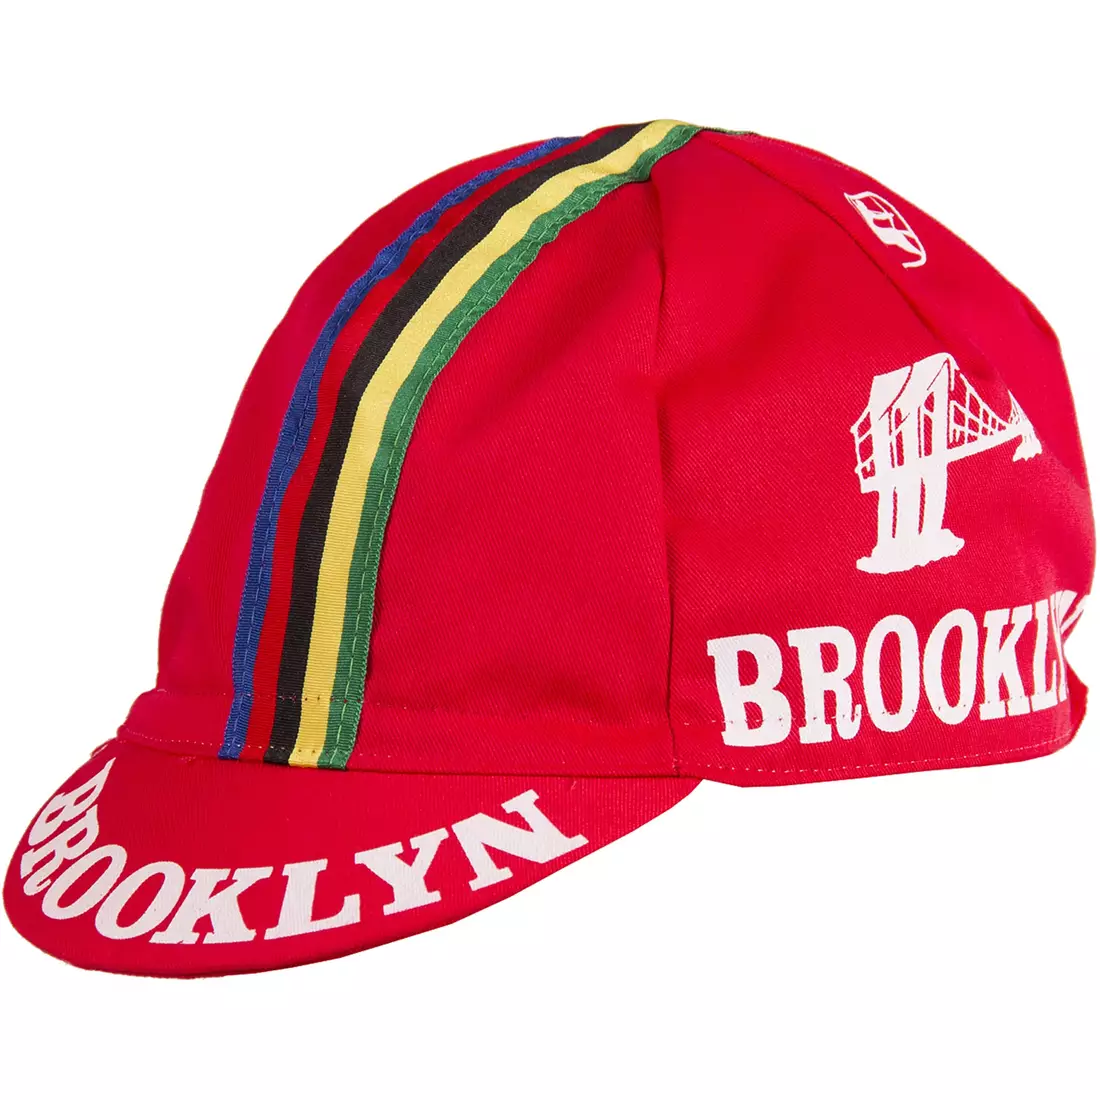 GIORDANA SS18 cycling cap - Brooklyn - Red w/ Stripe tape GI-S6-COCA-BROK-REDD one size